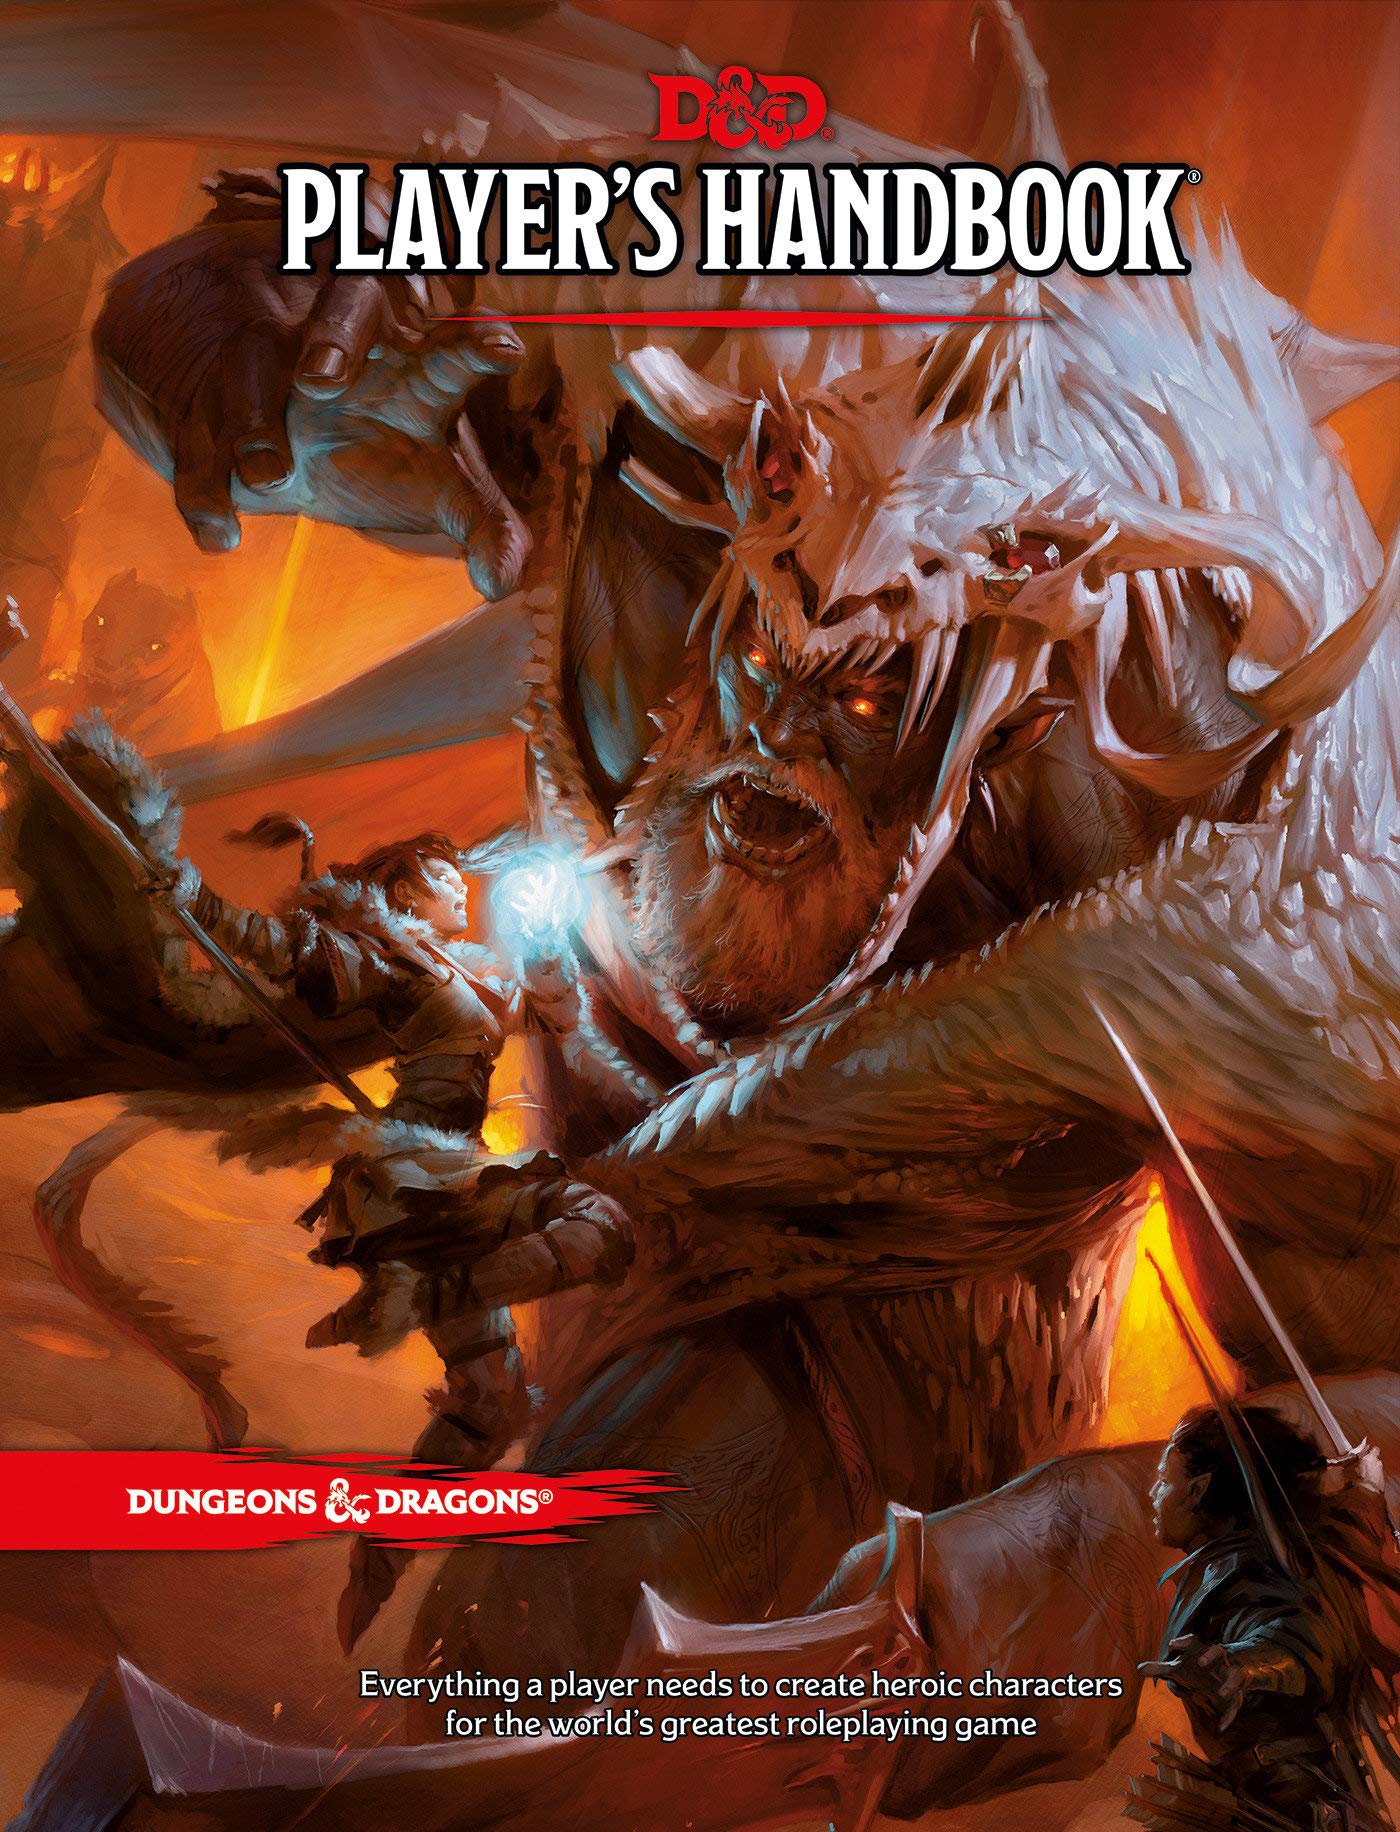 Dungeon masters manual 5e pdf